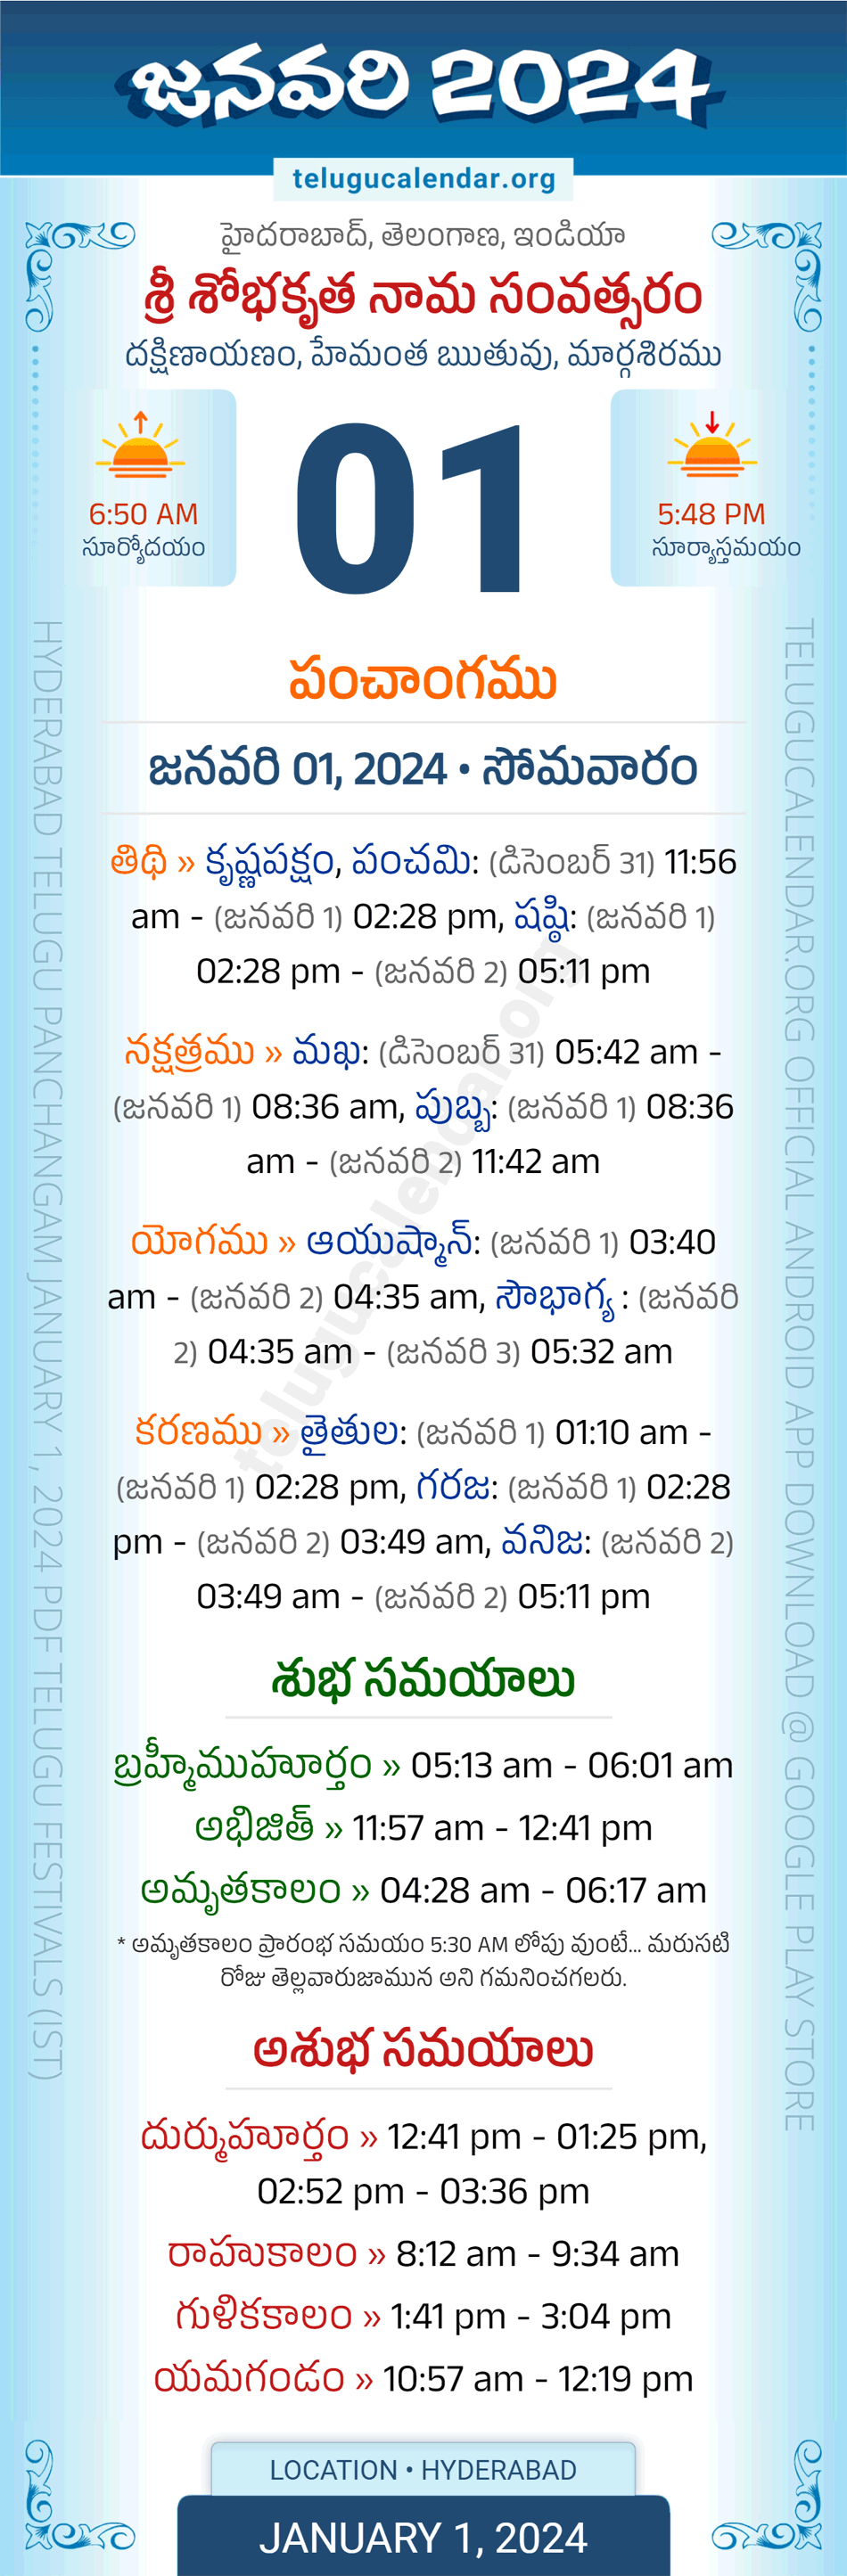 Telugu Calendar 2024 Kit Kirbie